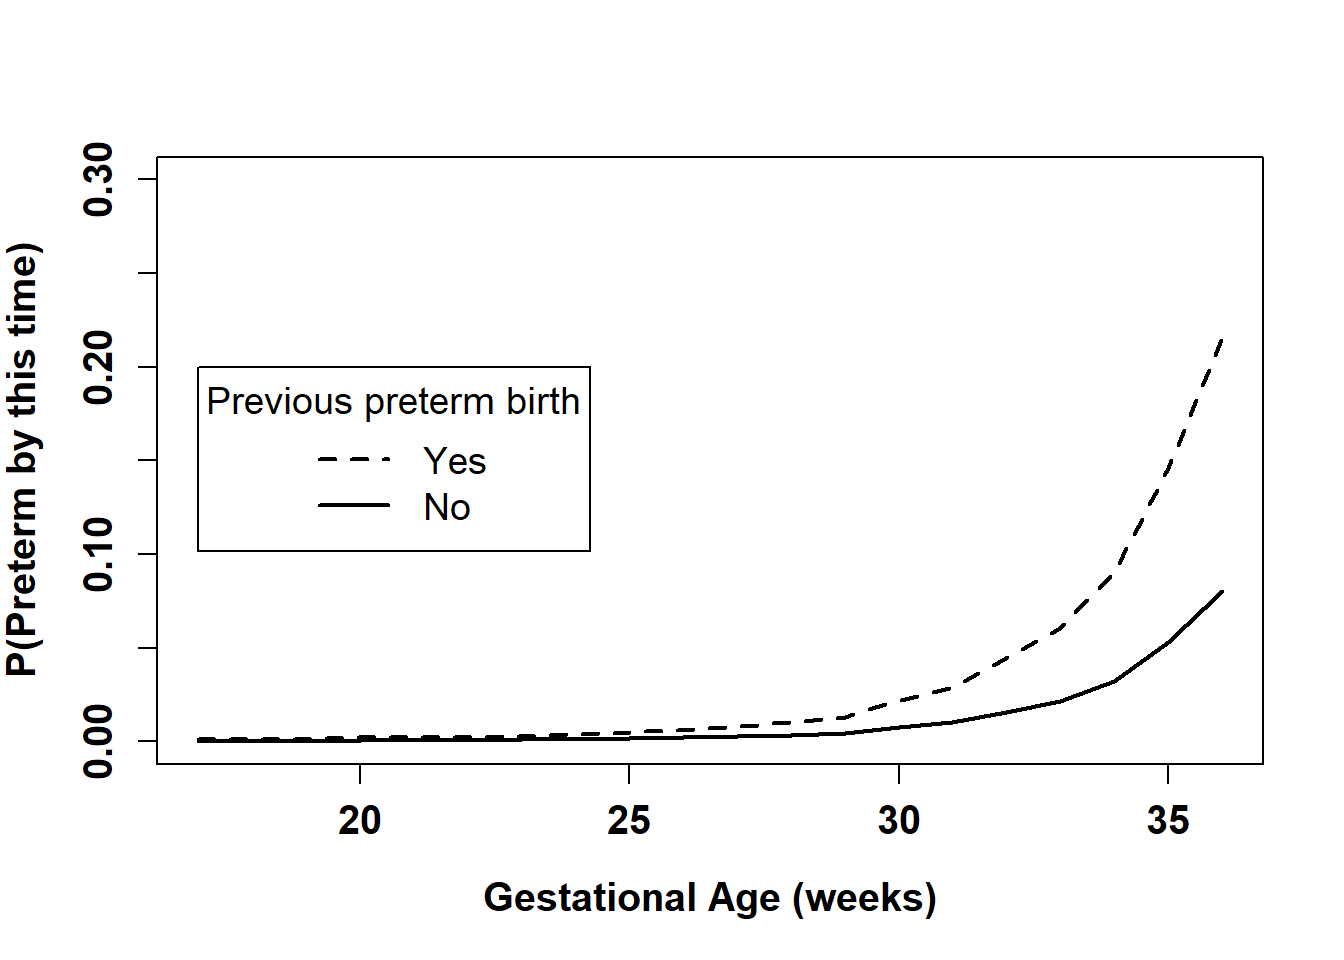 Estimated 1 - survival function by previous preterm birth